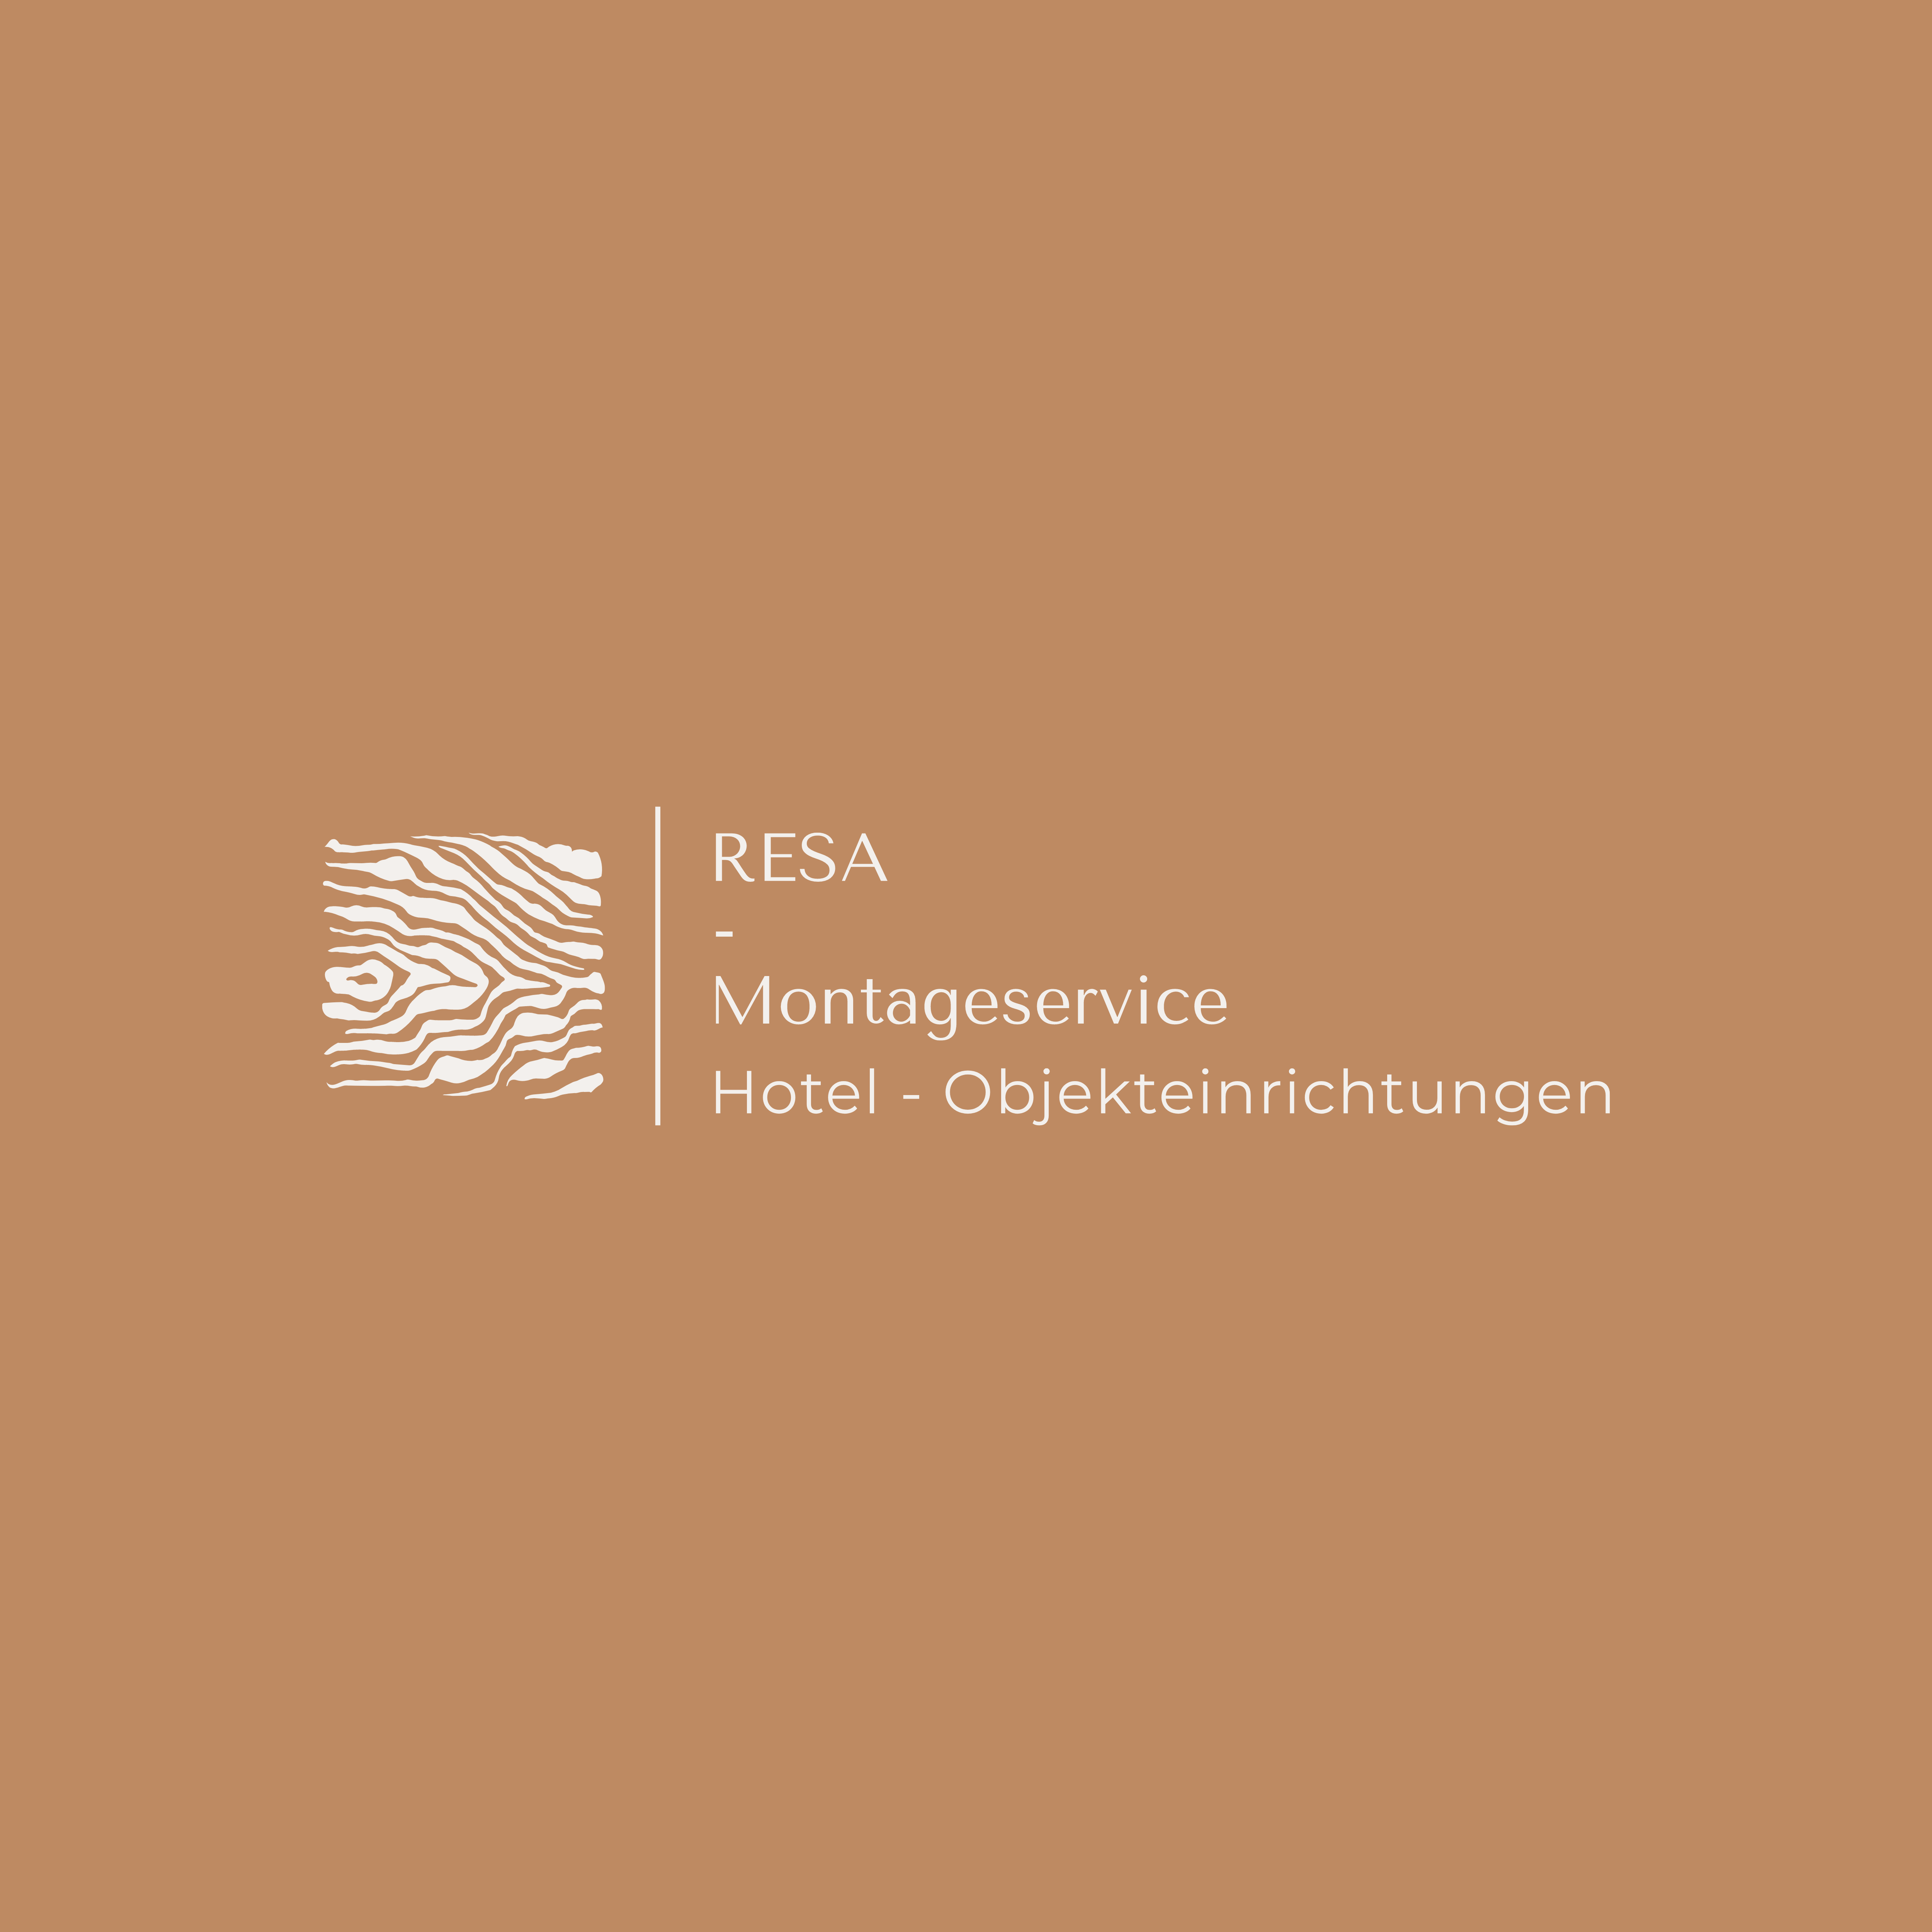 RESA-Montageservice, Agnes Sassenberg Logo